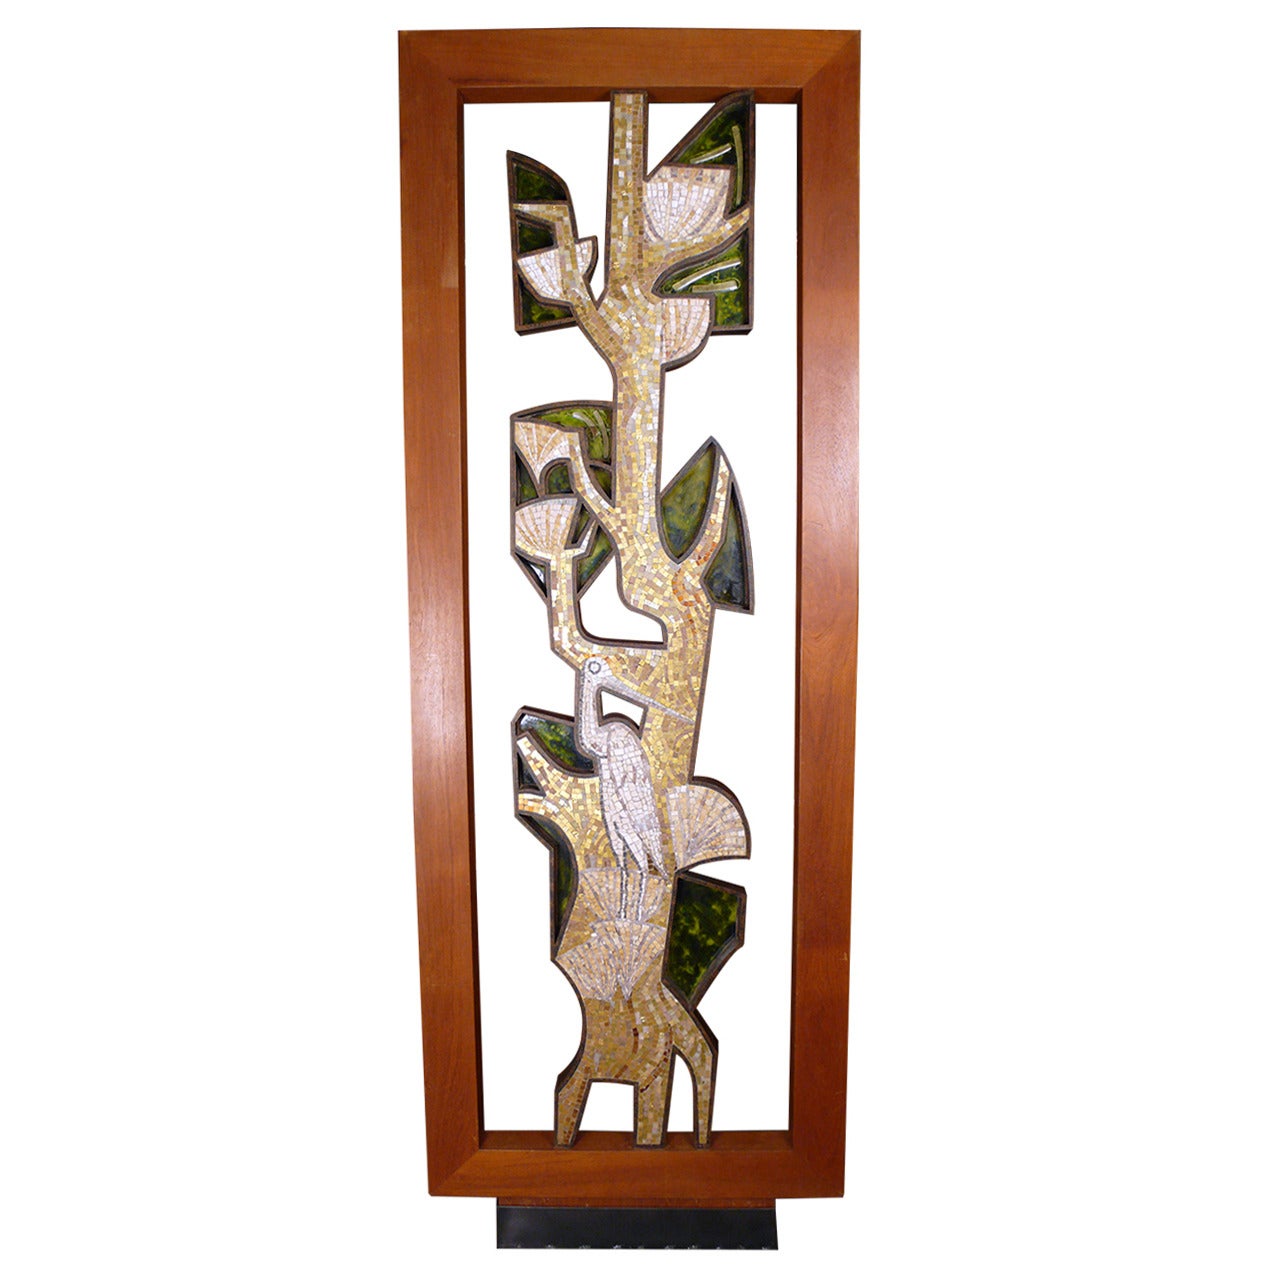 Millard Sheets and Octavio Medellin, Freestanding Heron Mosaic Sculpture